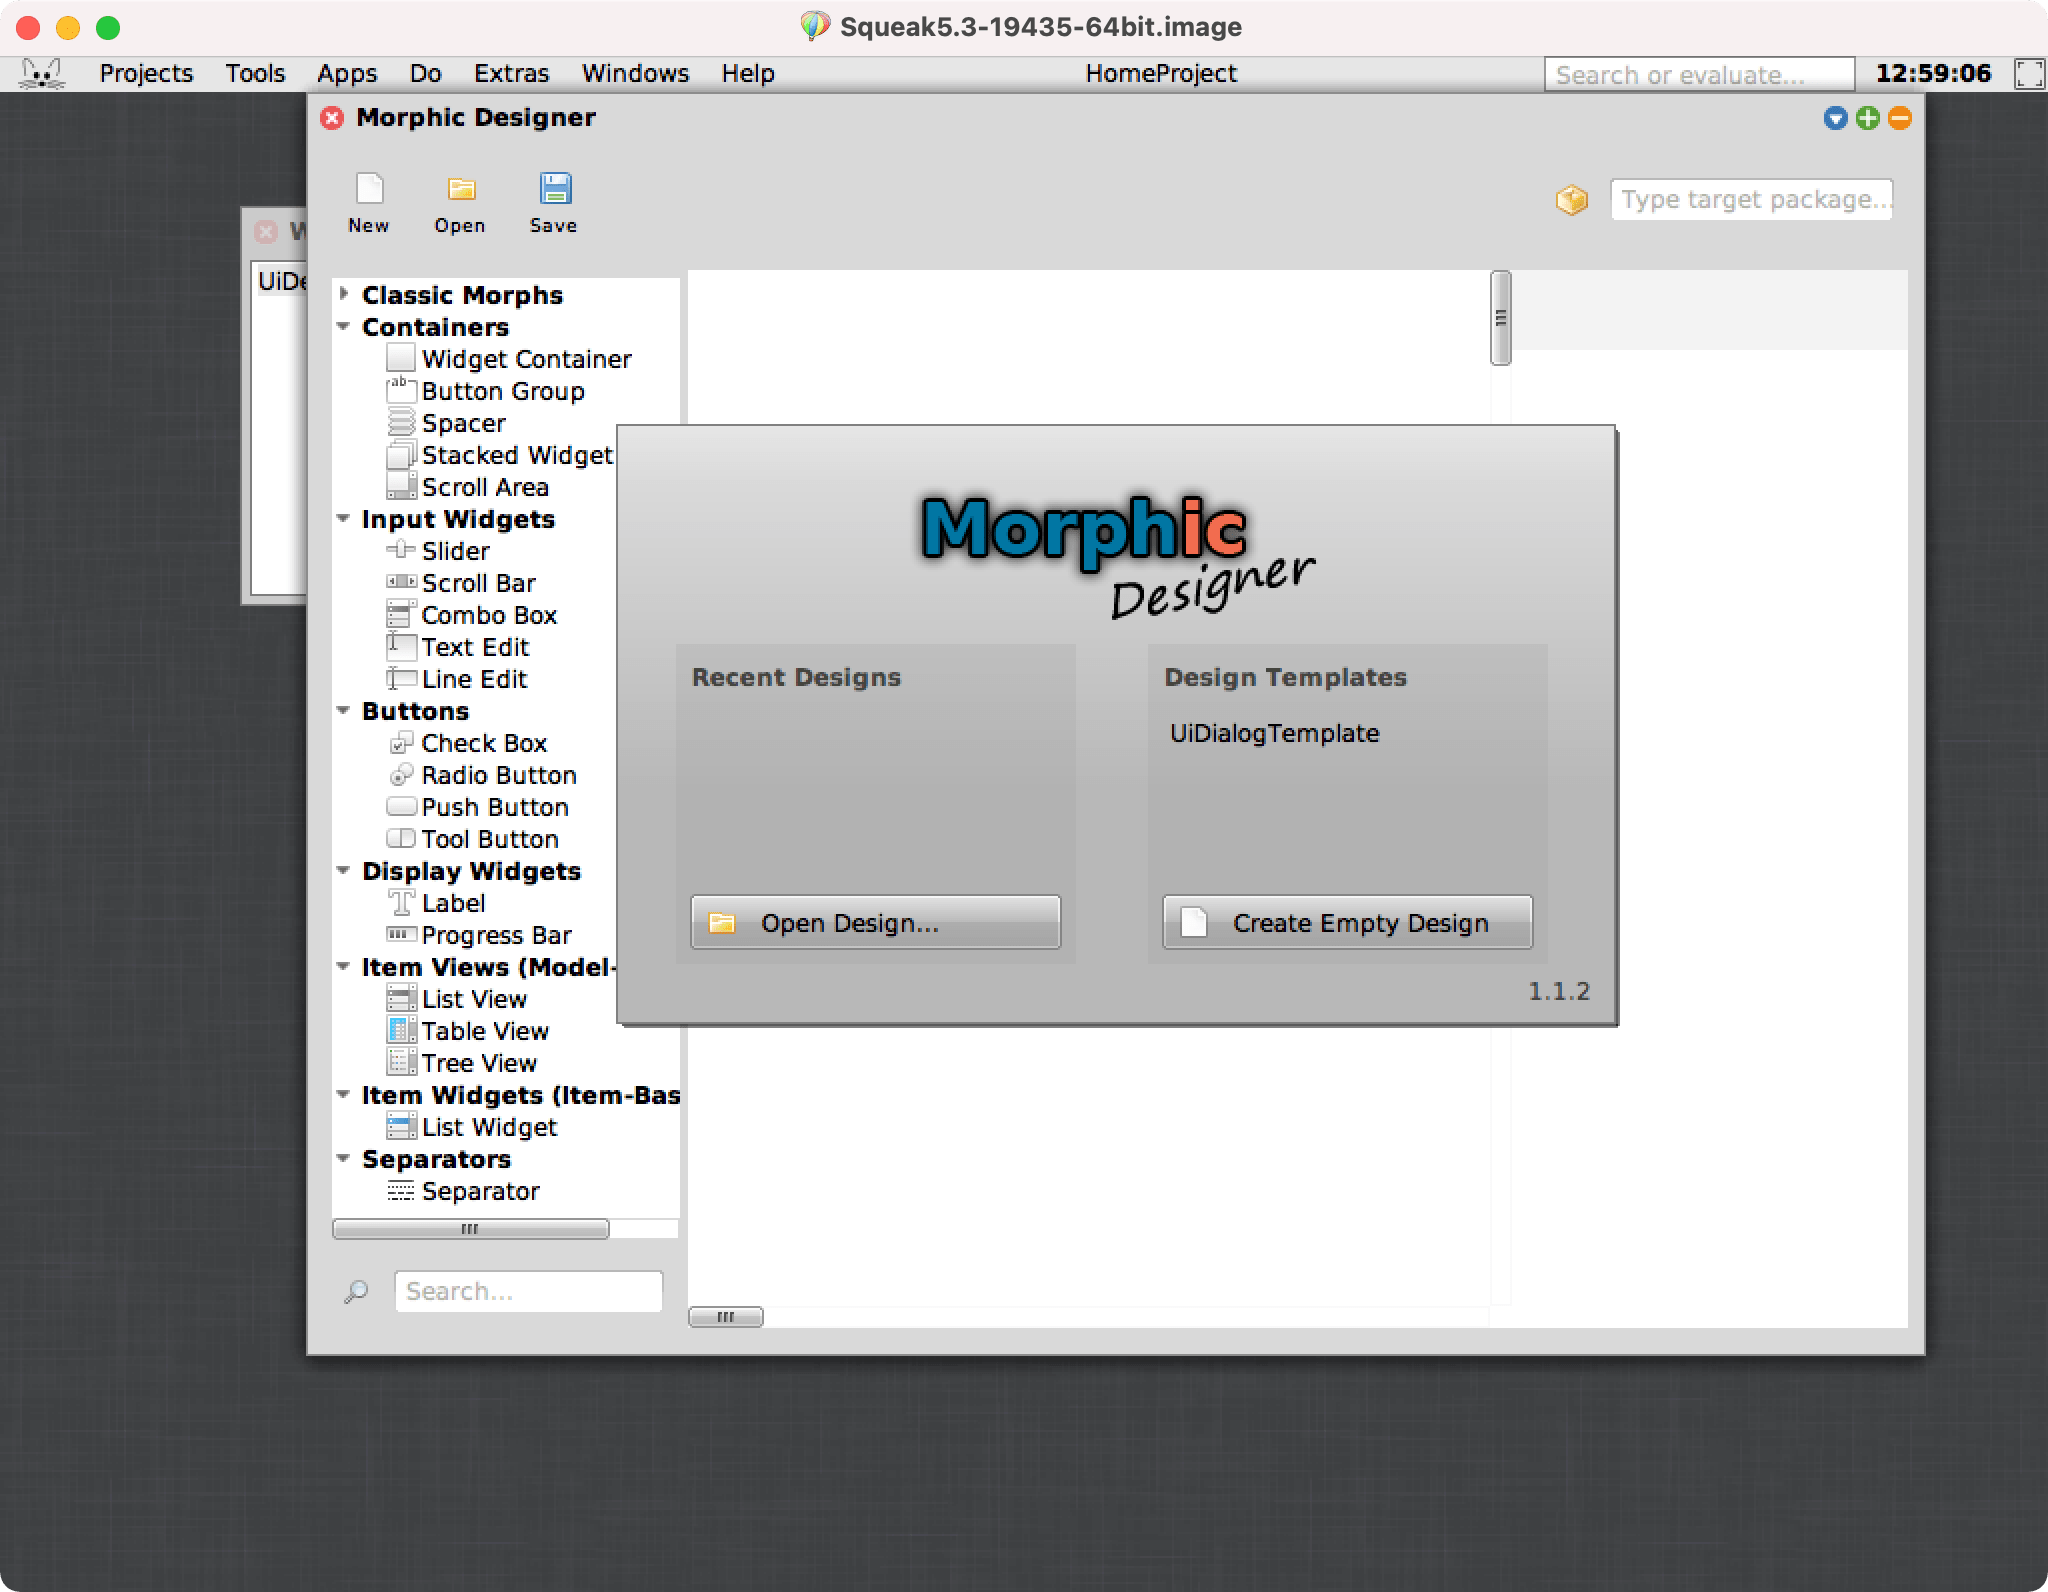 Morphic Designer splash screen with options to "Open Design" or "Create Empty Design"